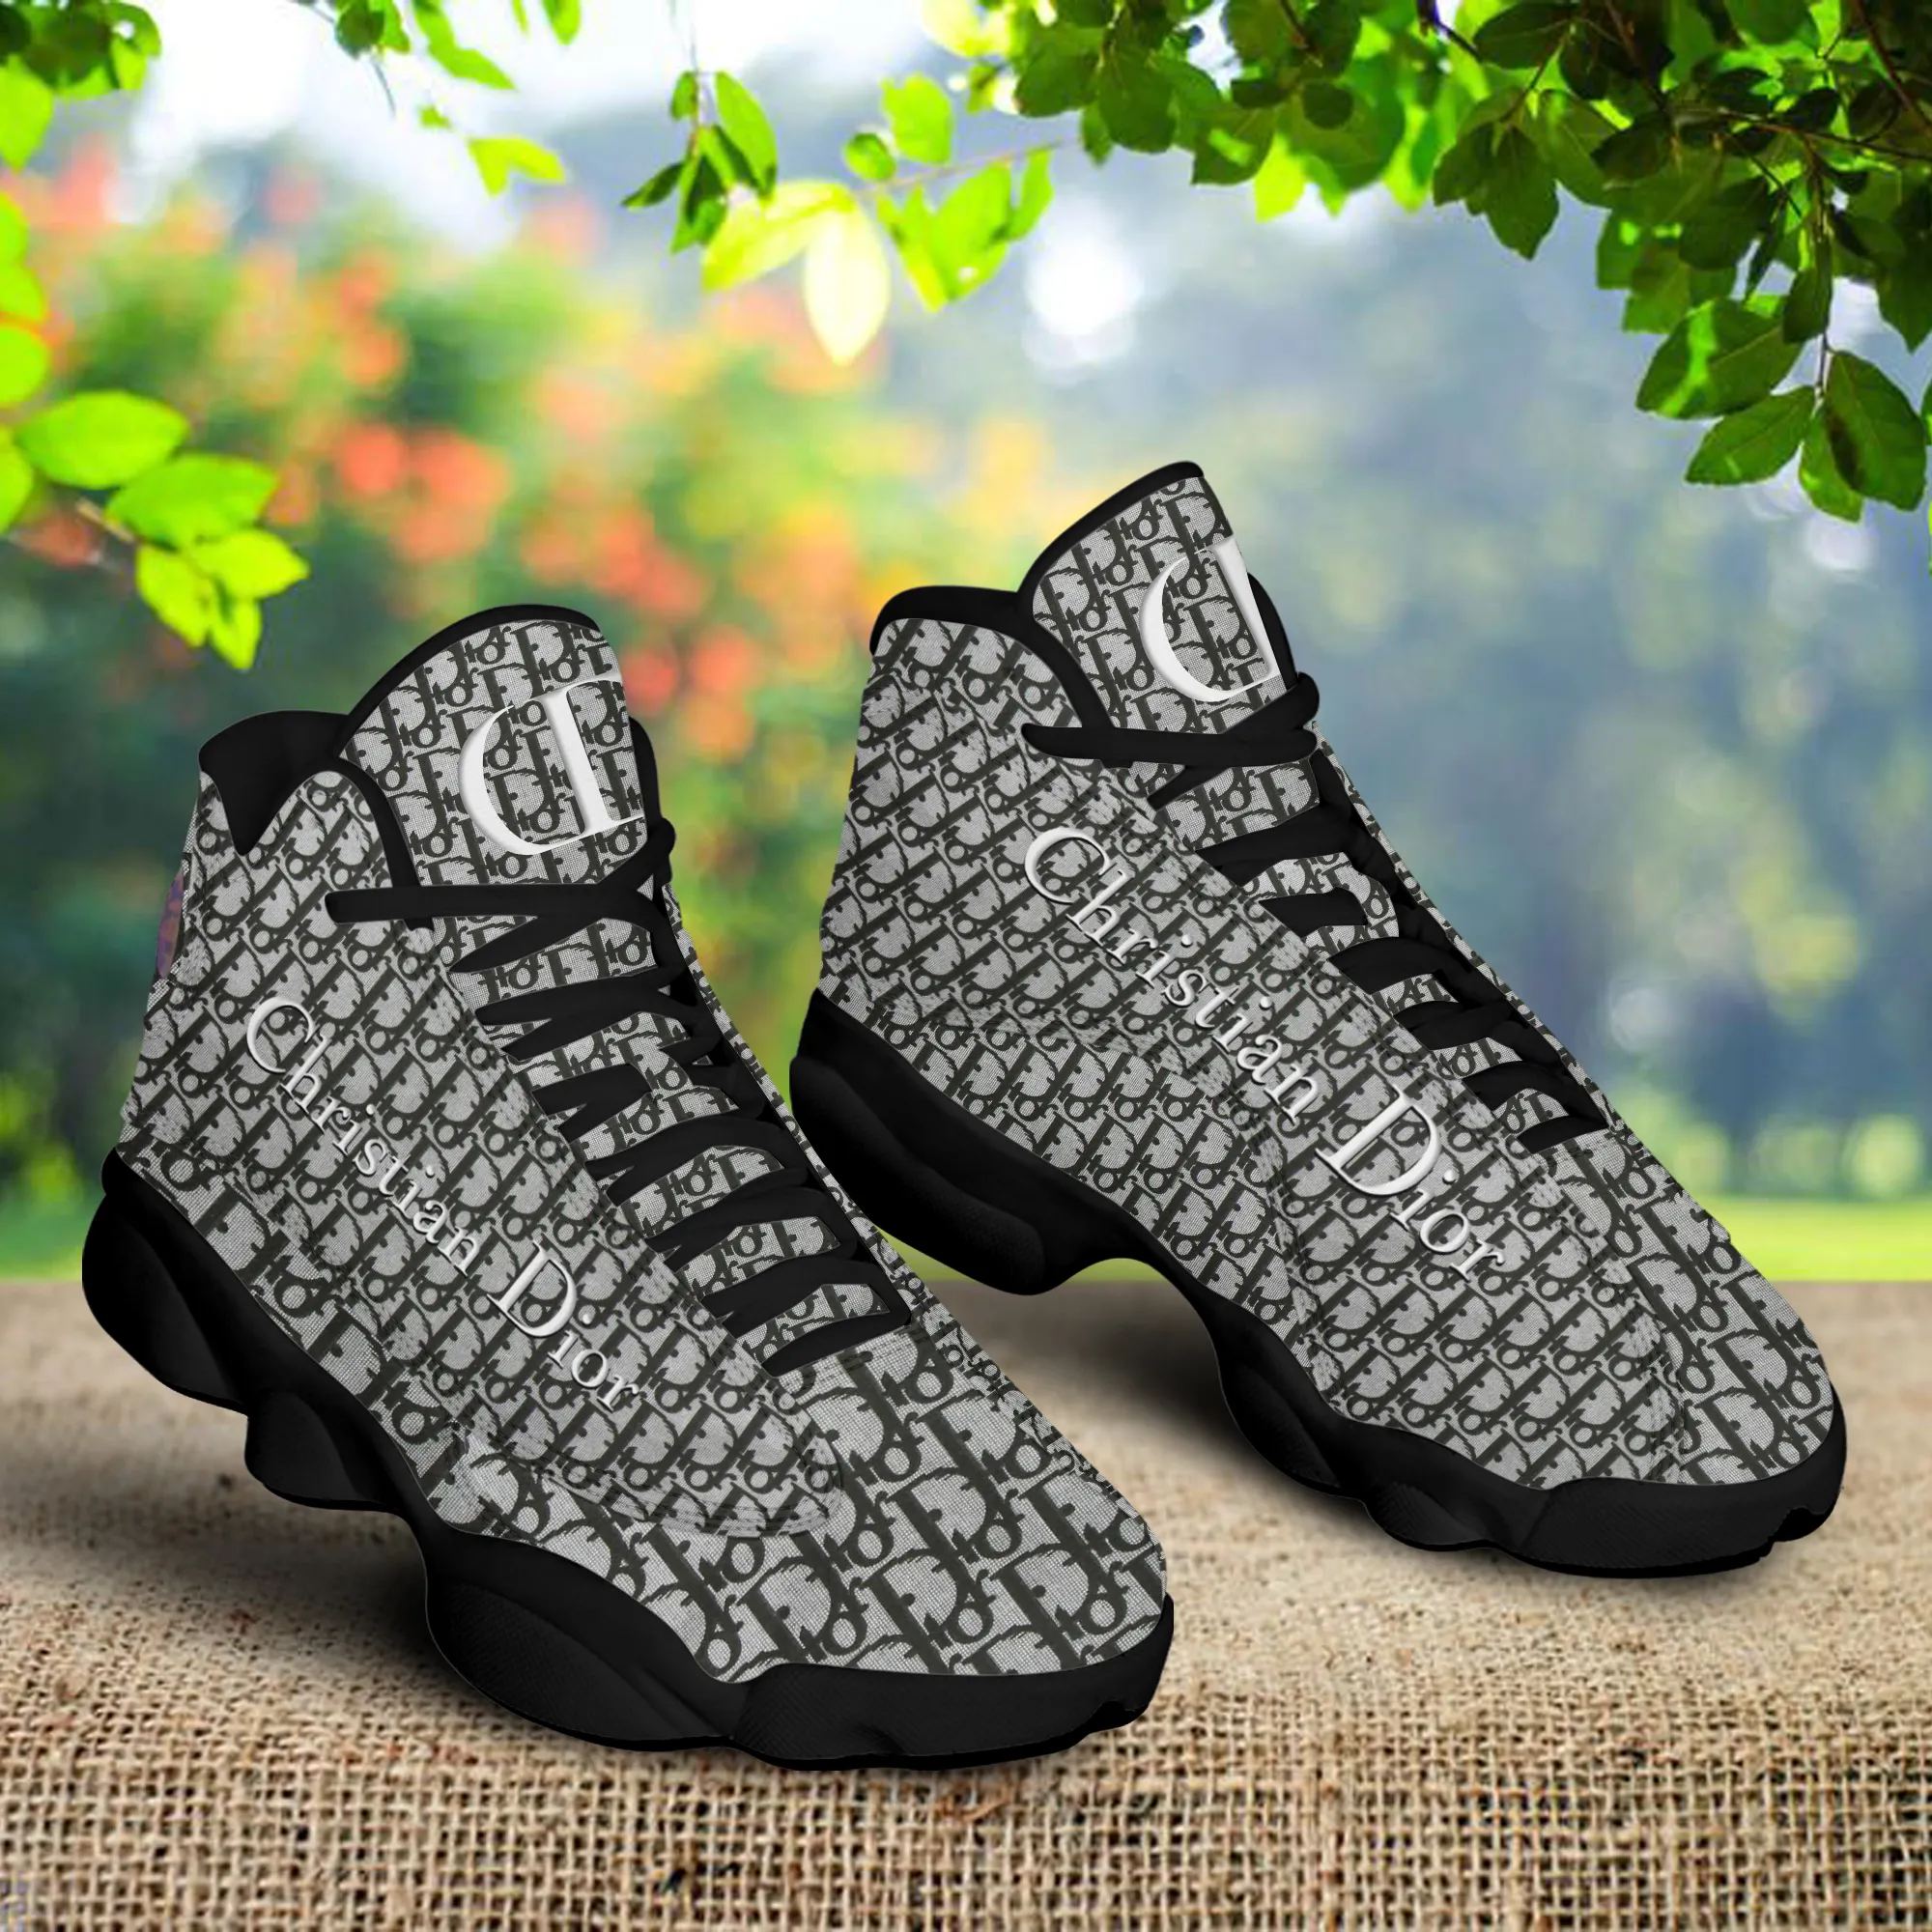 Dior Grey Air Jordan 13 Sneakers Luxury Fashion Shoes Trending